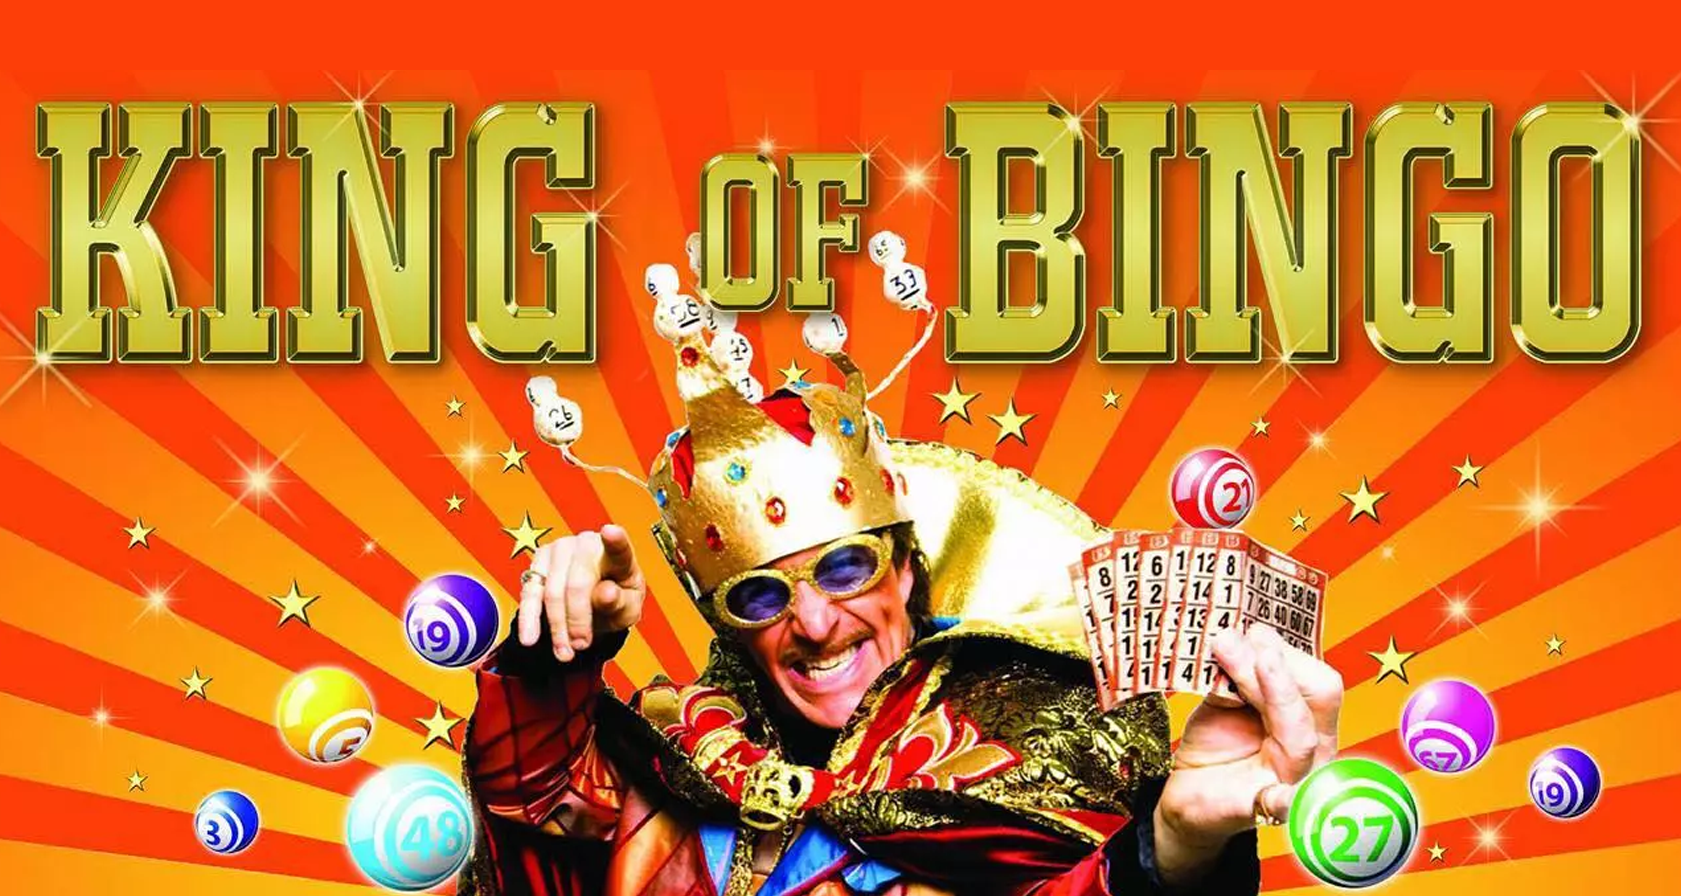 Teamuitje Emmen: King of Bingo